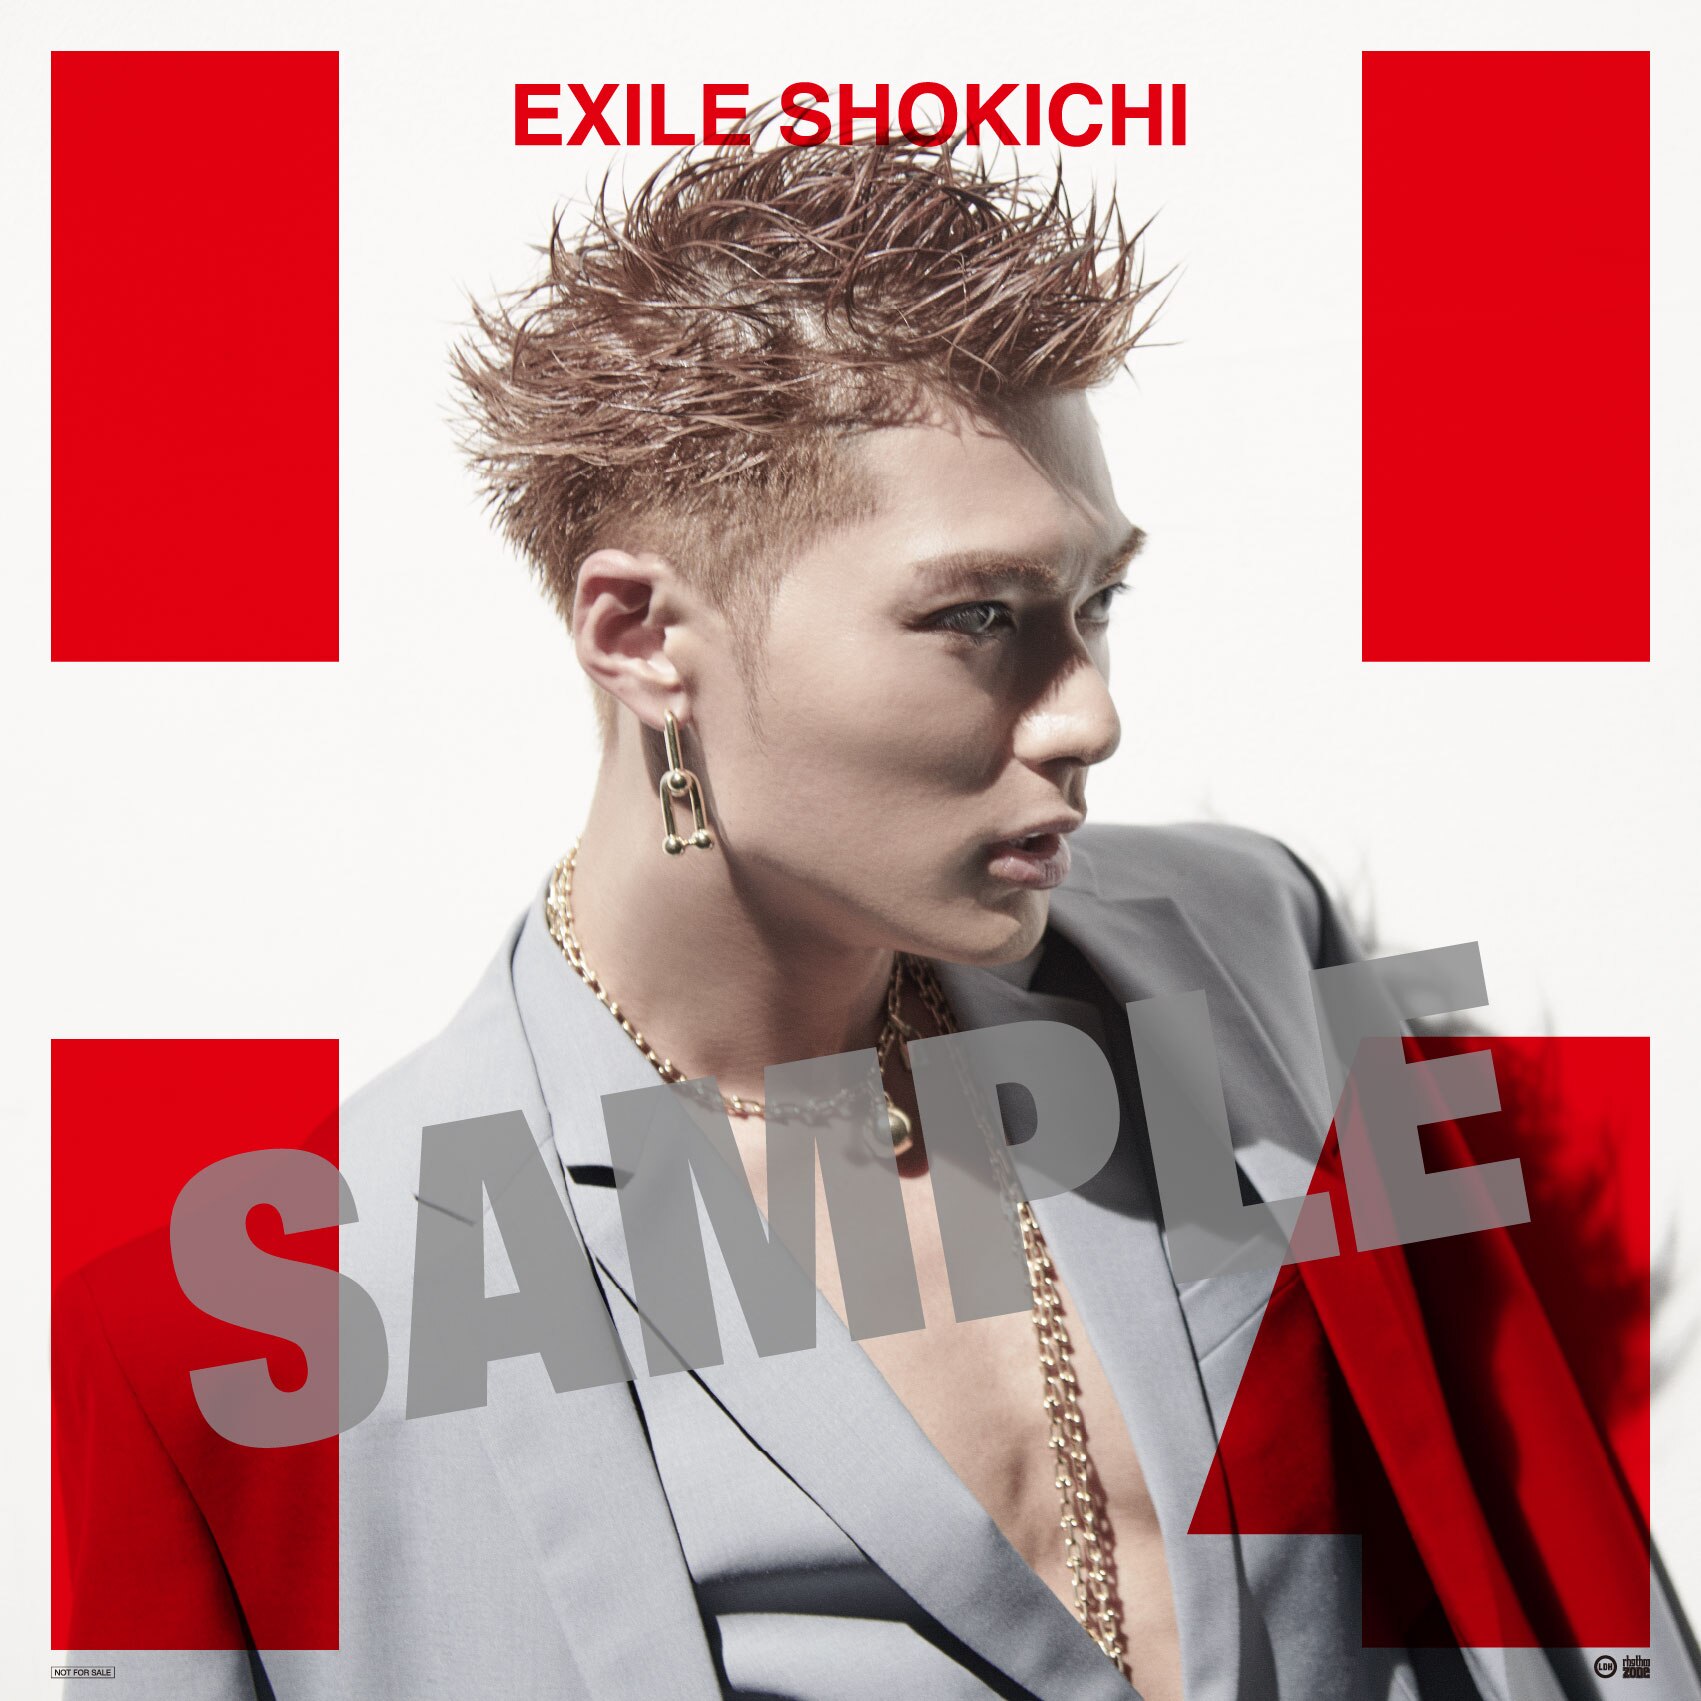 News Exile Shokichi Official Website